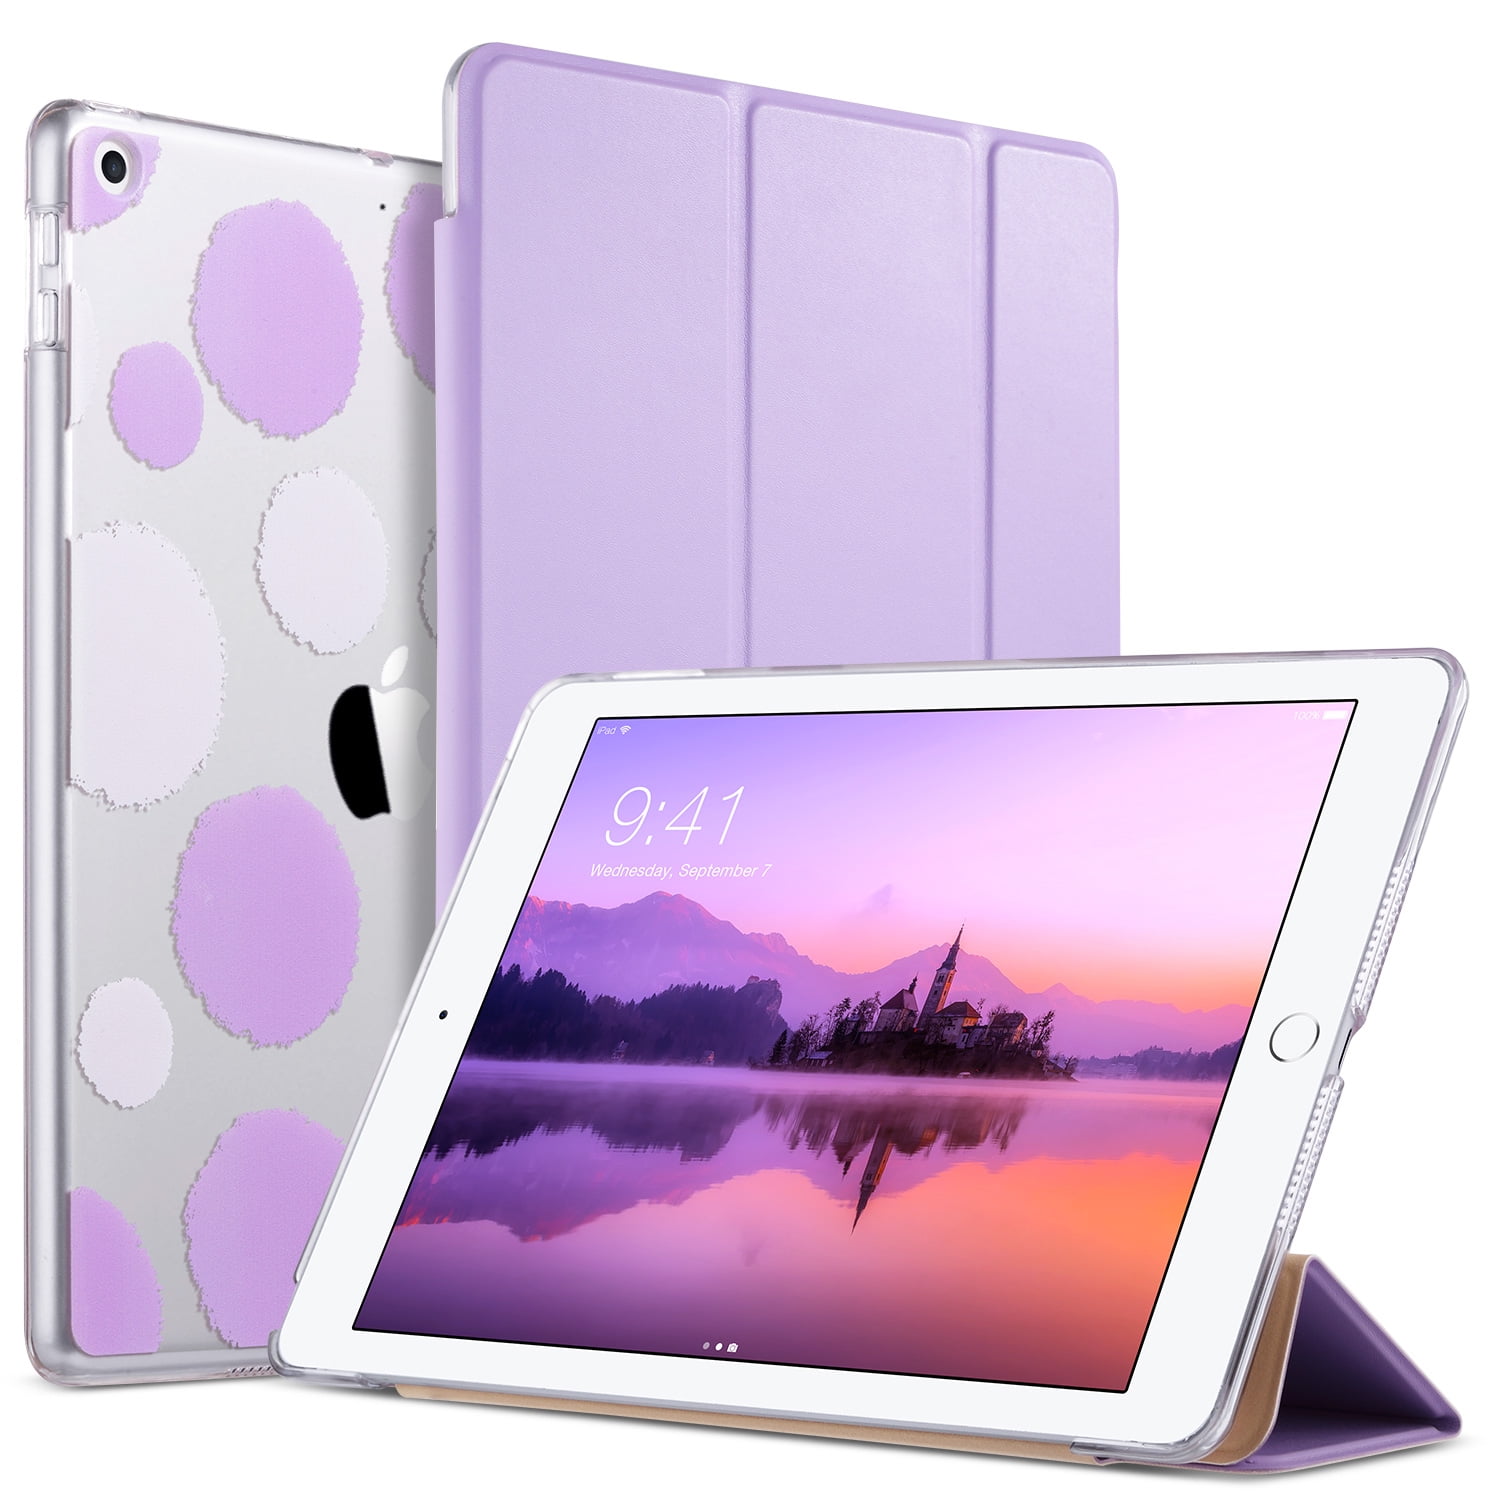 tilstrækkelig jævnt Hus ULAK Case for iPad 6th Generation, iPad 5th Generation Case, Slim Trifold  Smart Stand Cover for Apple iPad 9.7 inch 2017/2018 Released, Purple -  Walmart.com